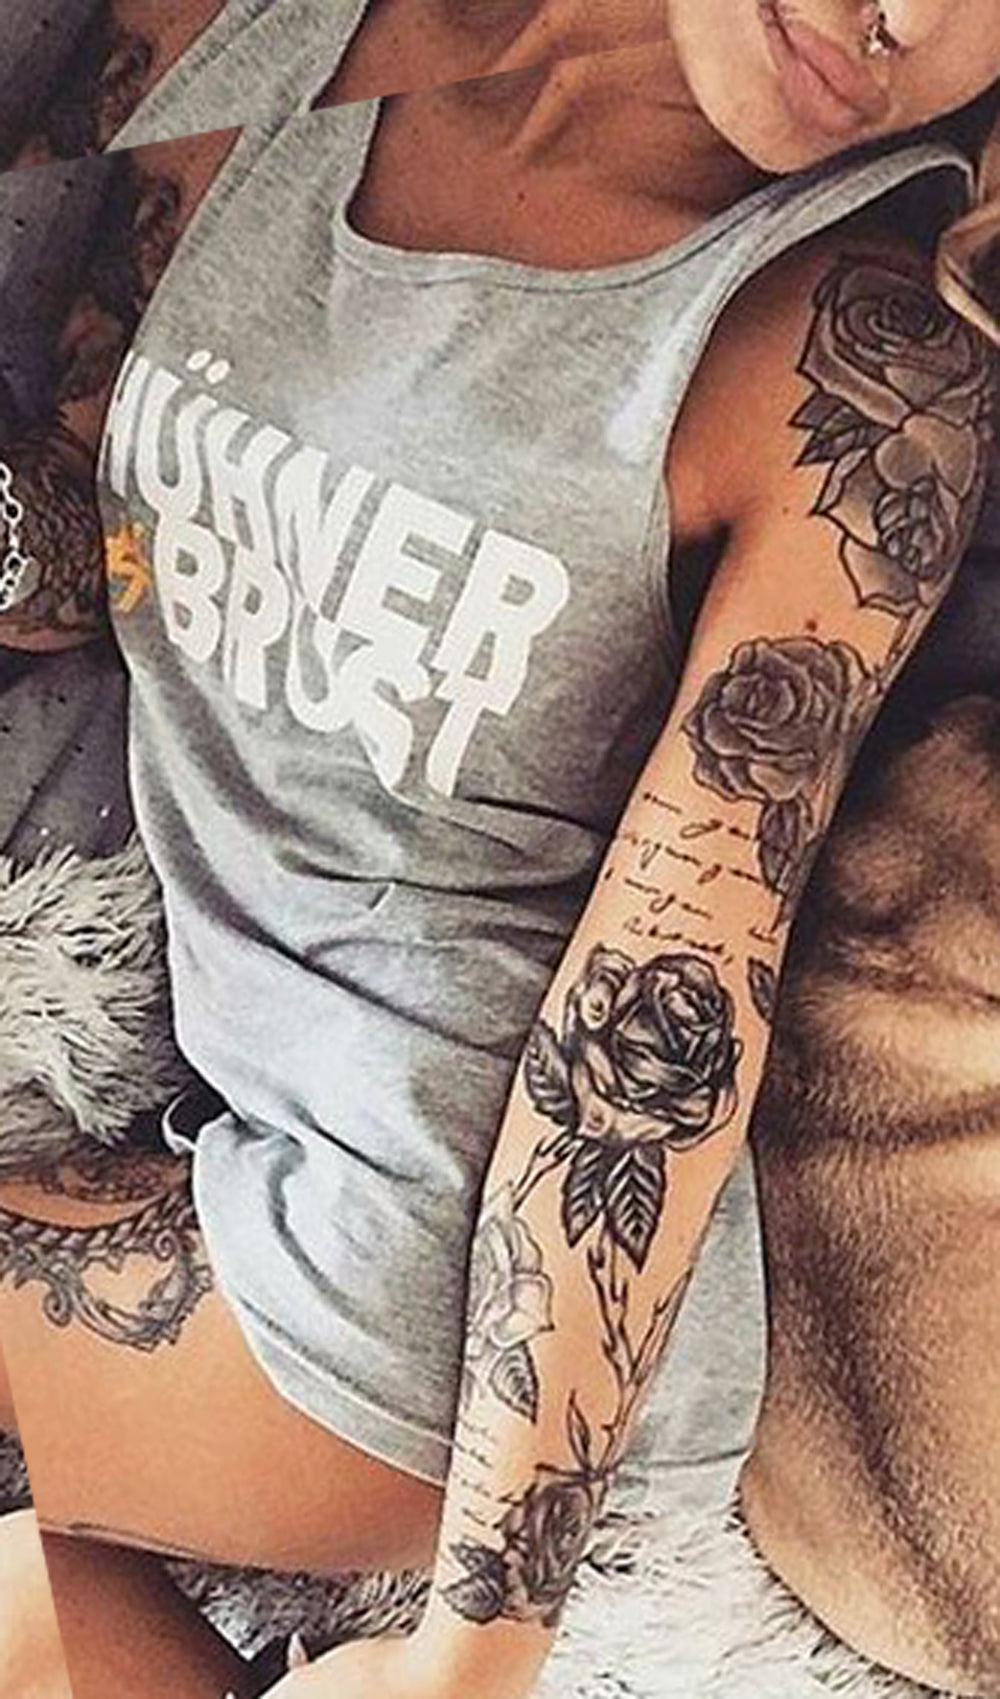 Vintage Realistic Rose Full Arm Sleeve Tattoo Ideas for Women - Black Flower Forearm Tat -  ideas de tatuaje de manga de brazo de rosa para mujeres - www.MyBodiArt.com